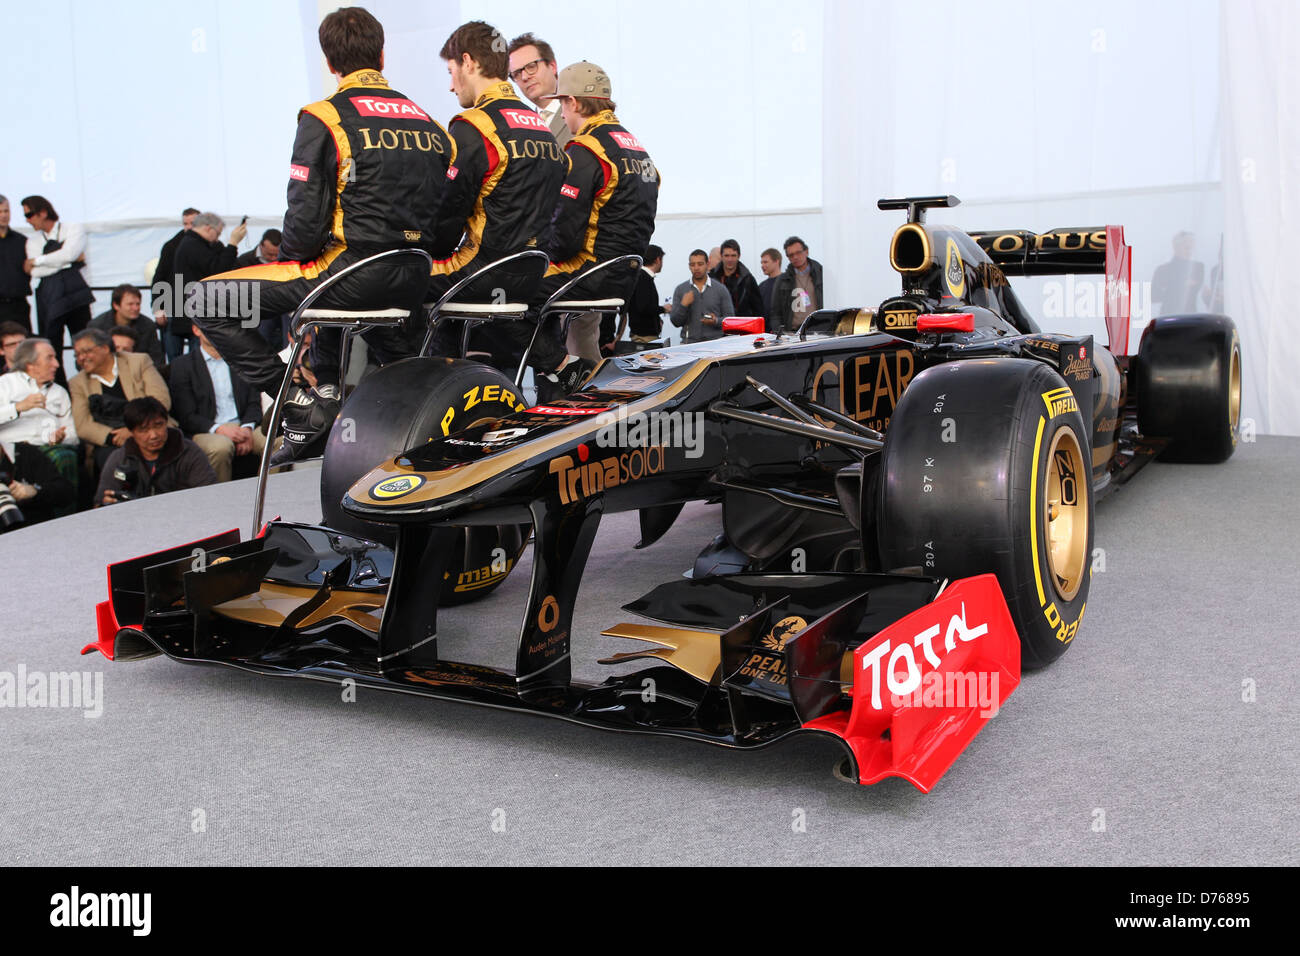 Lotus E20 F1 - Formula One - Renault Lotus Team Drivers and Car Jerez, Spain - 06.02.12 Stock Photo